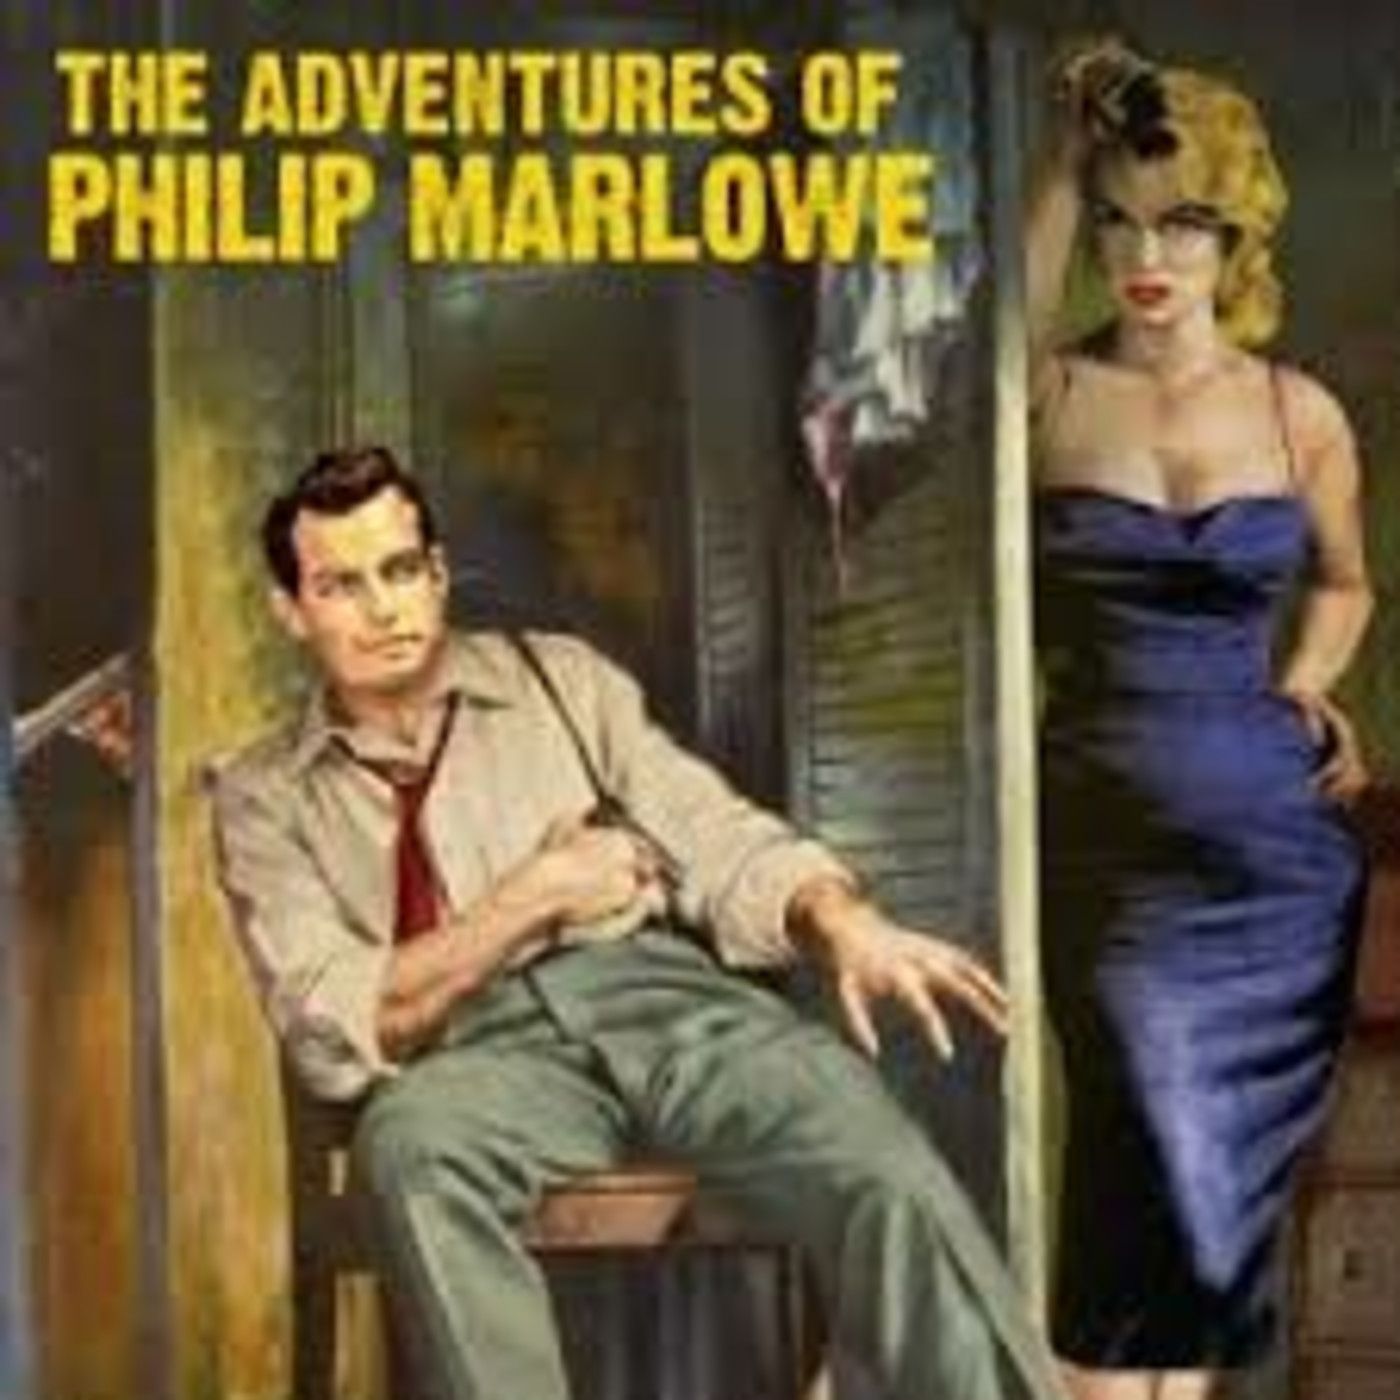 The Adventures of Philip Marlowe - The Dancing Hands